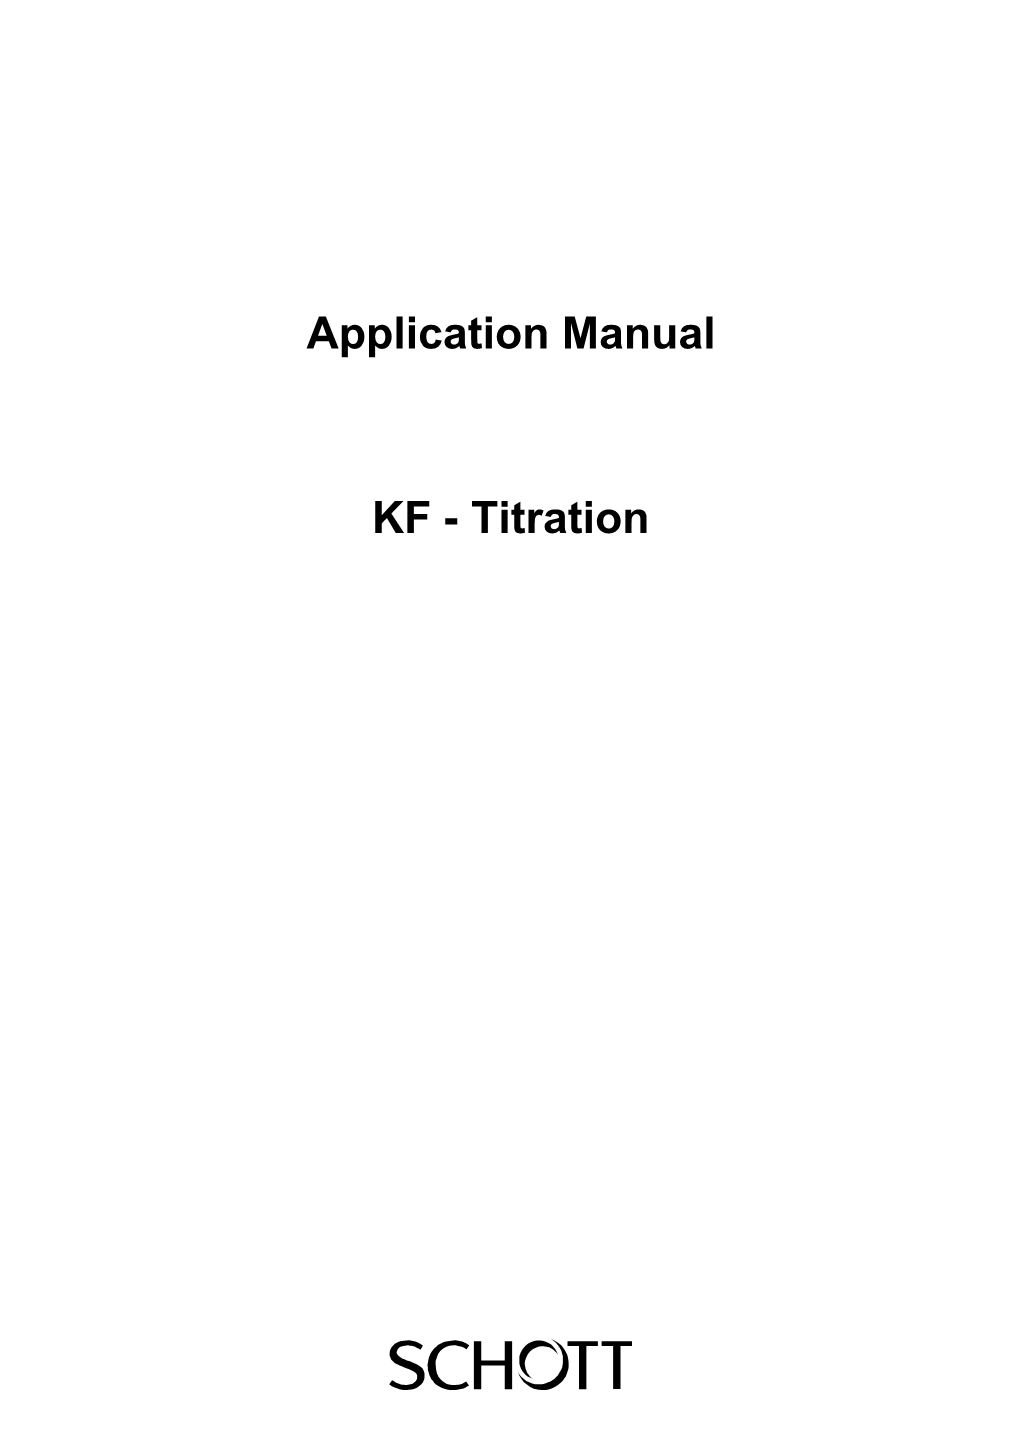 Application Manual KF